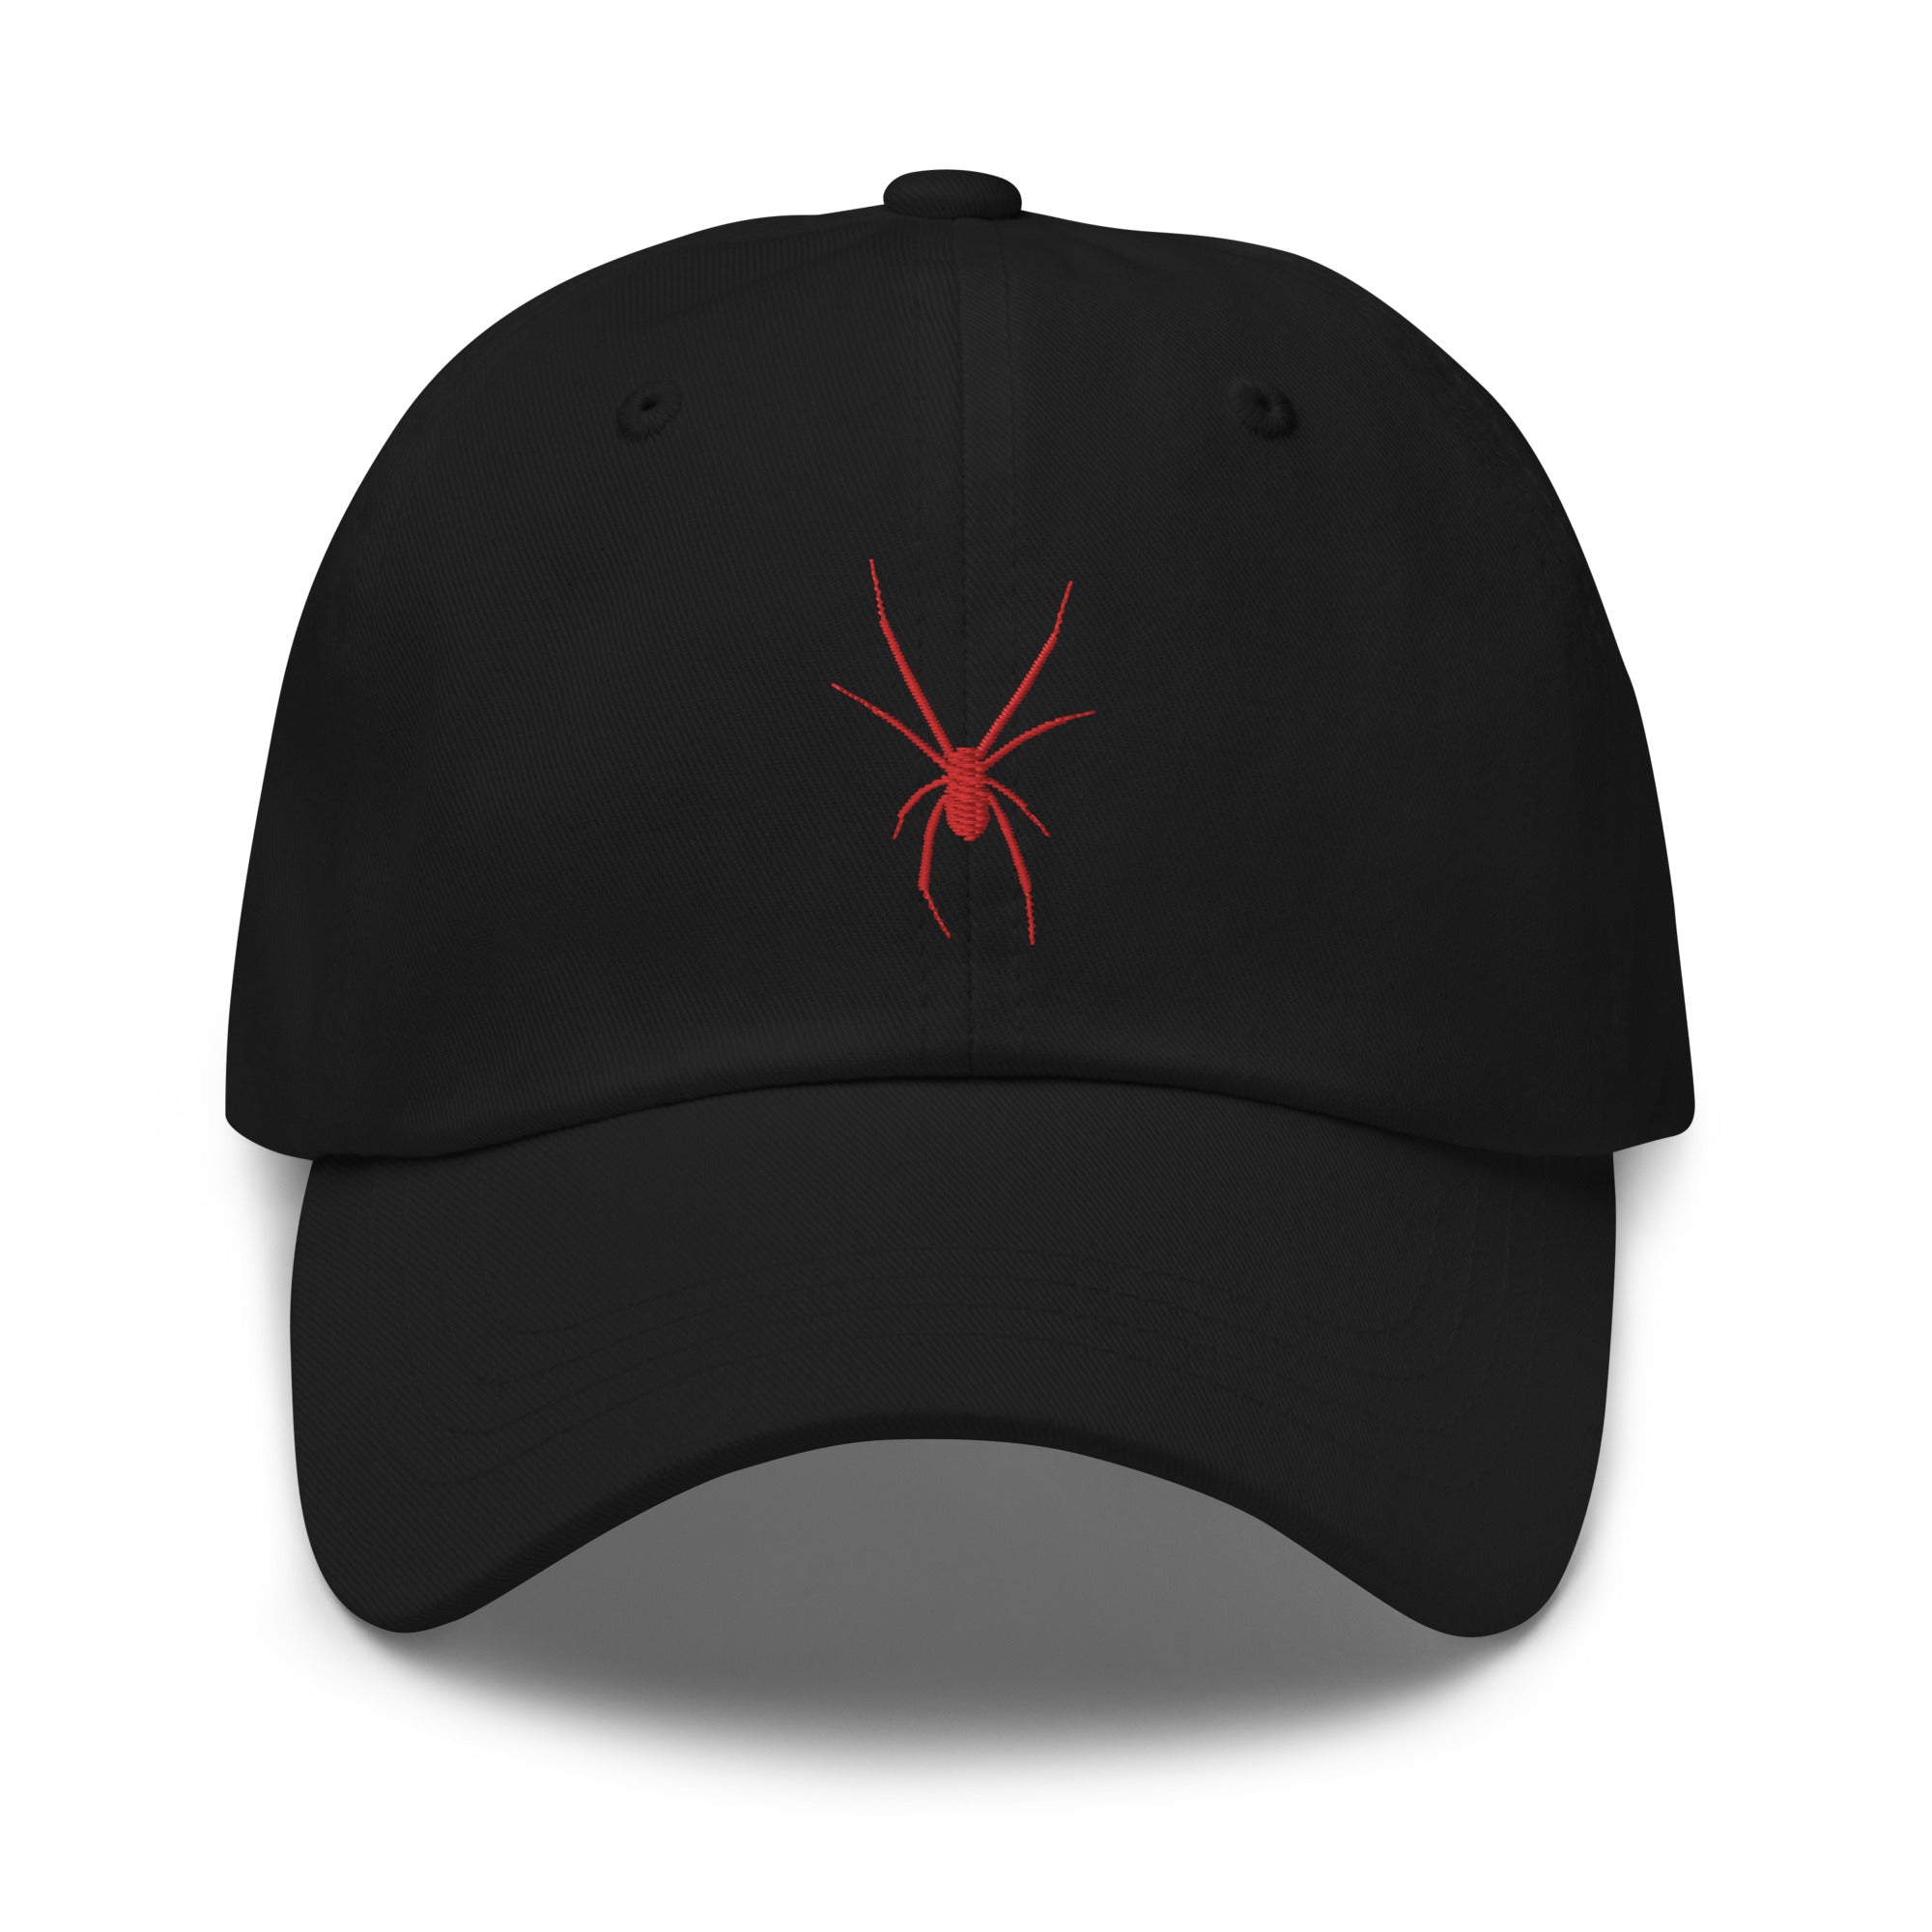 Arachnid Creepy Black Widow Spider Embroidered Baseball Cap Dad hat Red Thread - Edge of Life Designs